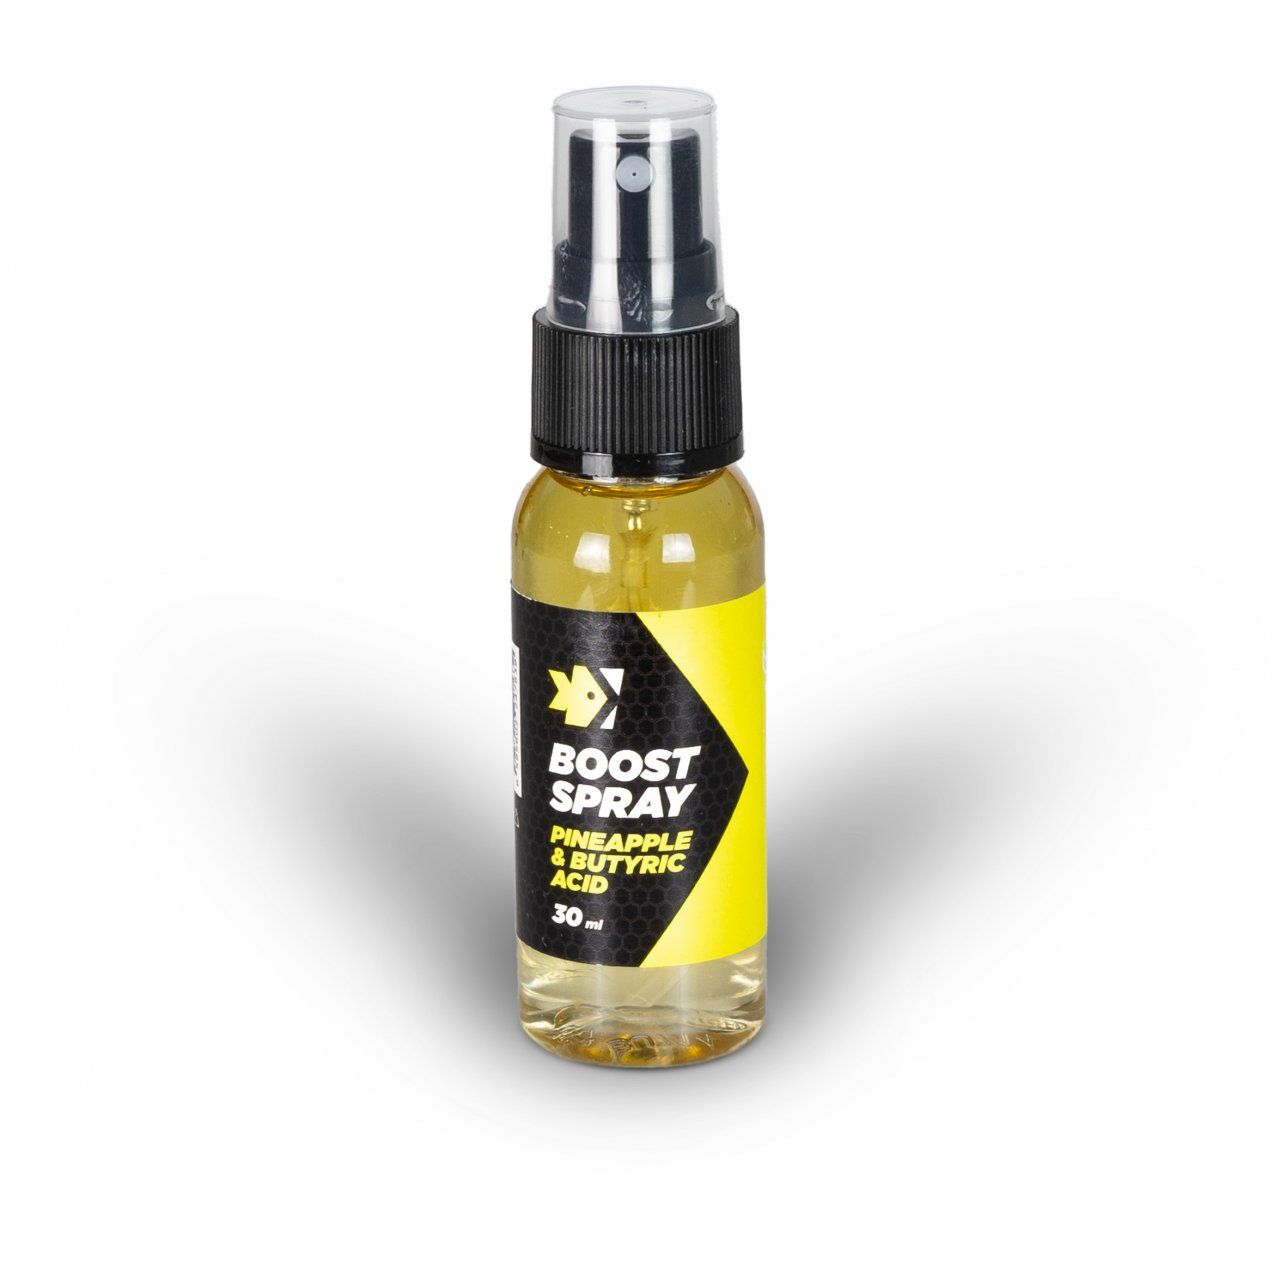 Feeder Expert Boost Spray 30ml Pineapple&Butyric Acid